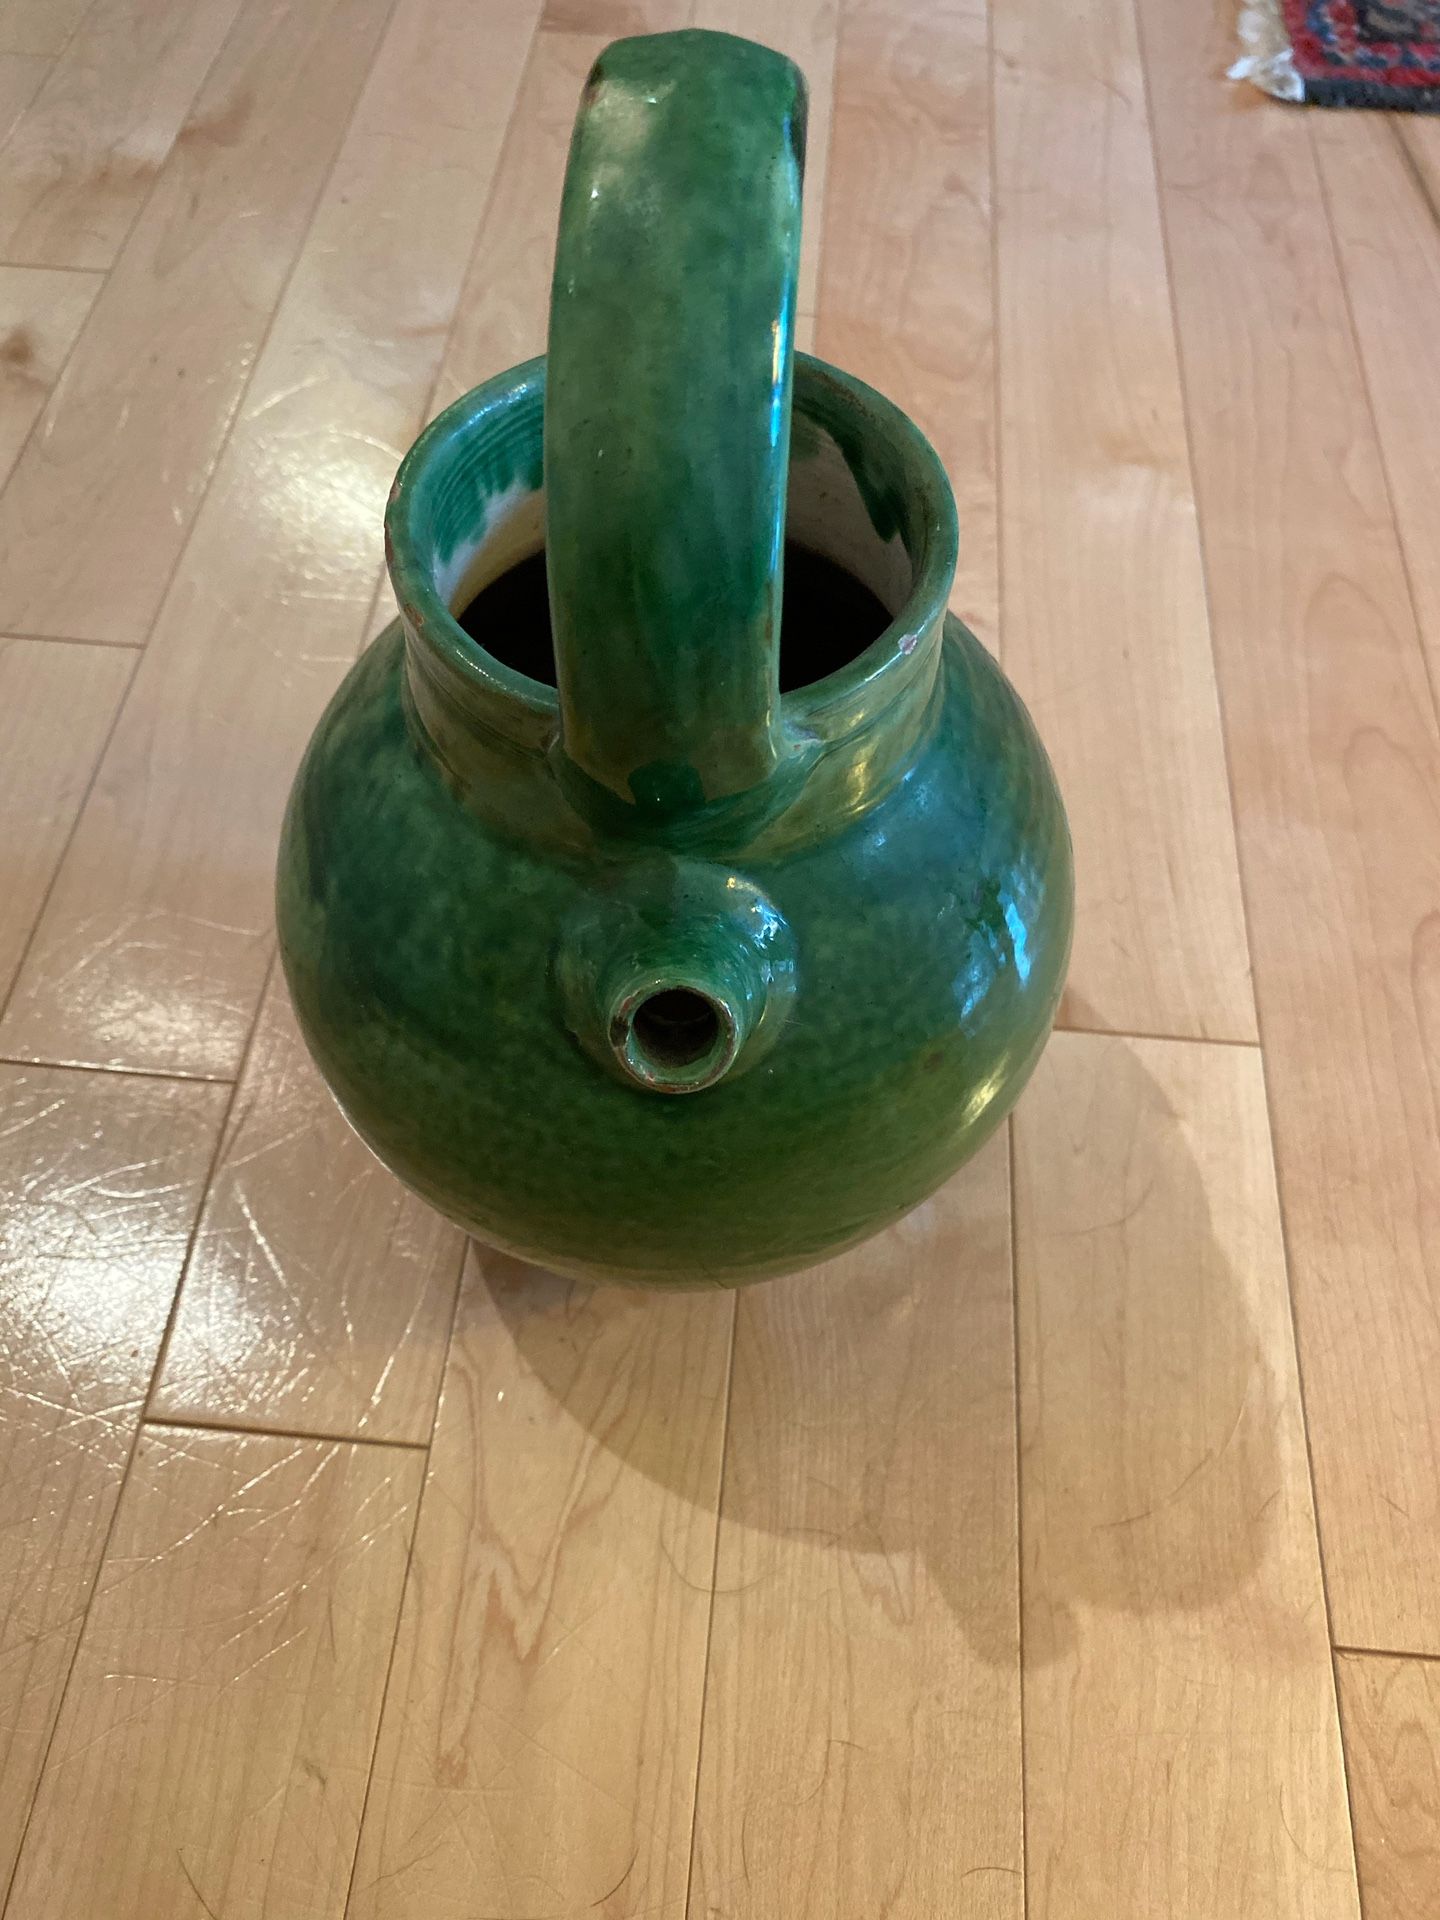 Vintage Ceramic Flower Pot Planter, Art Pottery, Succulent Green Plant Pot. Condition is Used. H 10.5" x W 7".